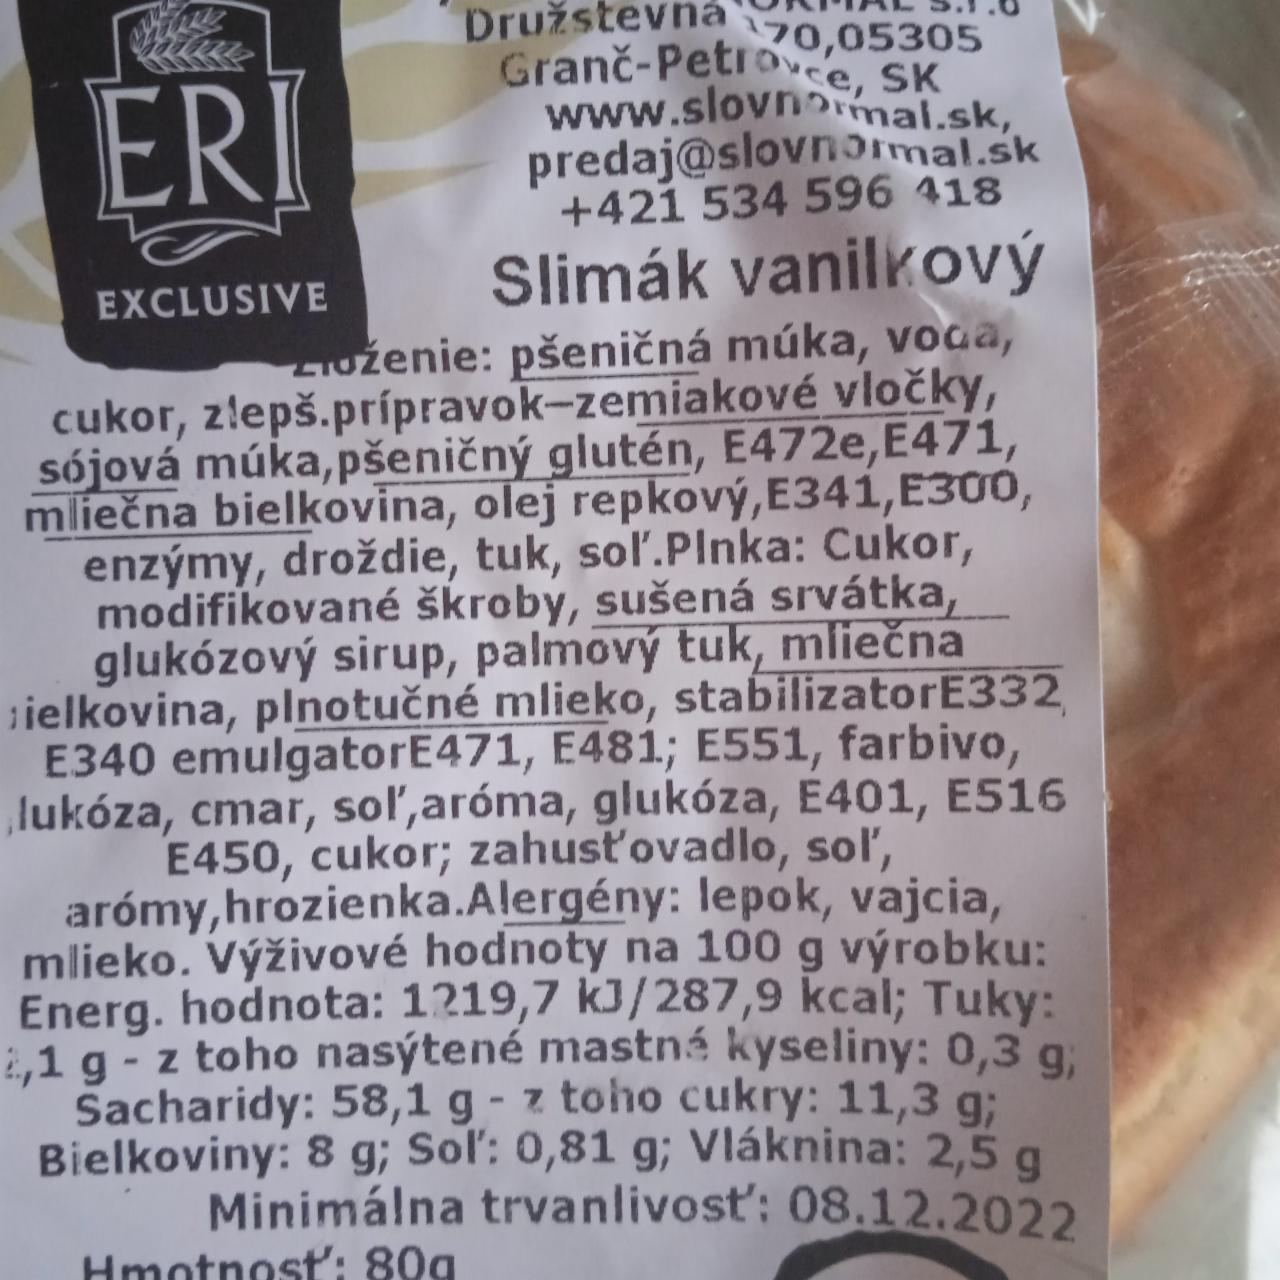 Fotografie - Slimák vanilkový ERI exclusive